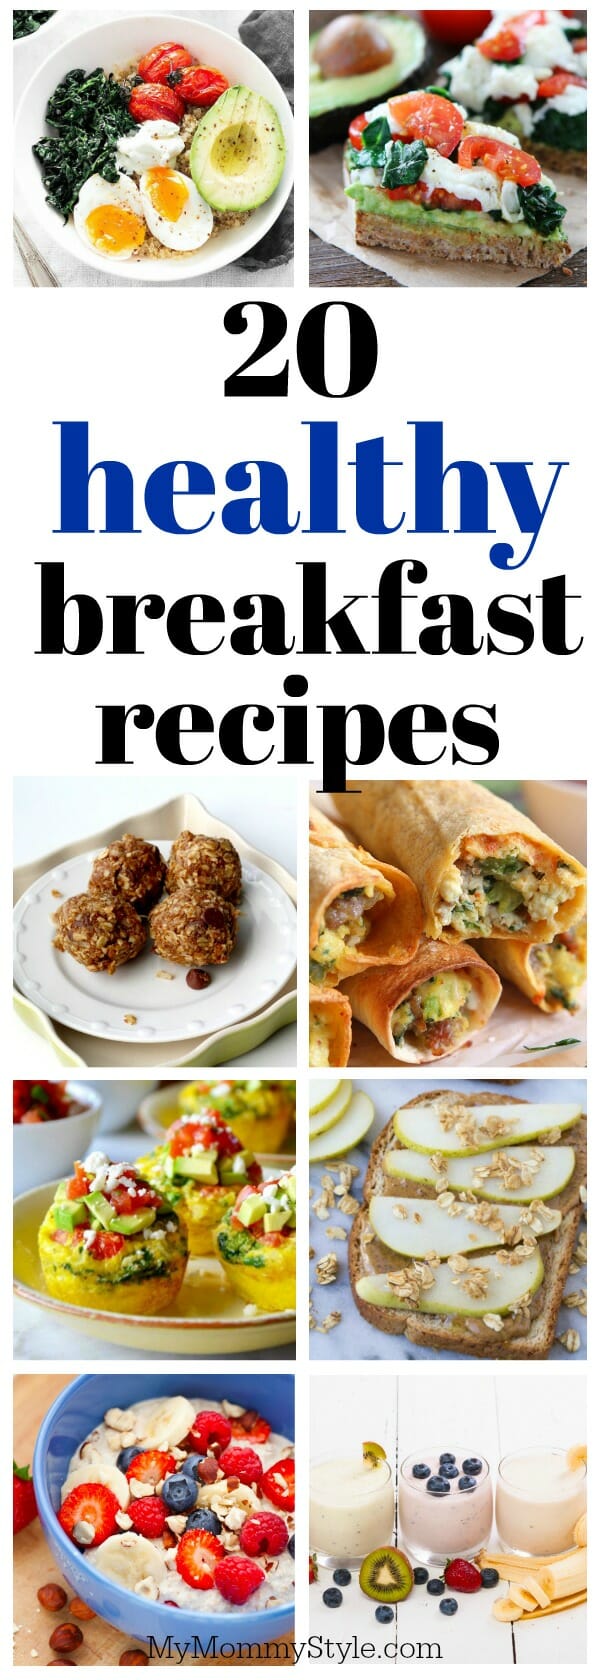 20 healthy breakfast recipes - My Mommy Style